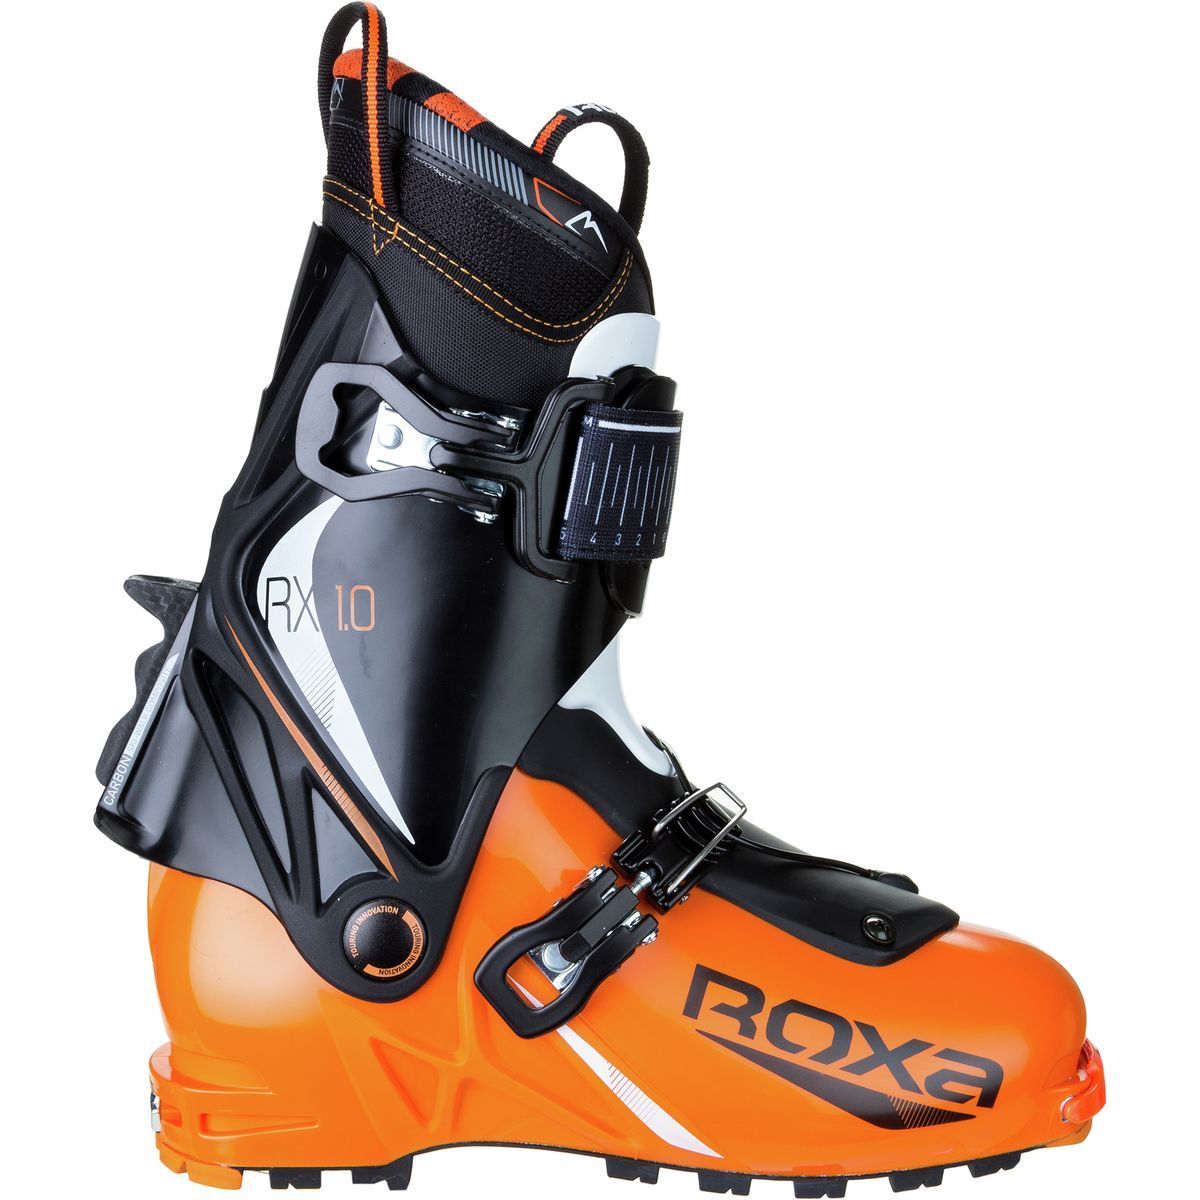 Roxa RX 1.0 Alpine Touring Boot Orange/Black, 26.5